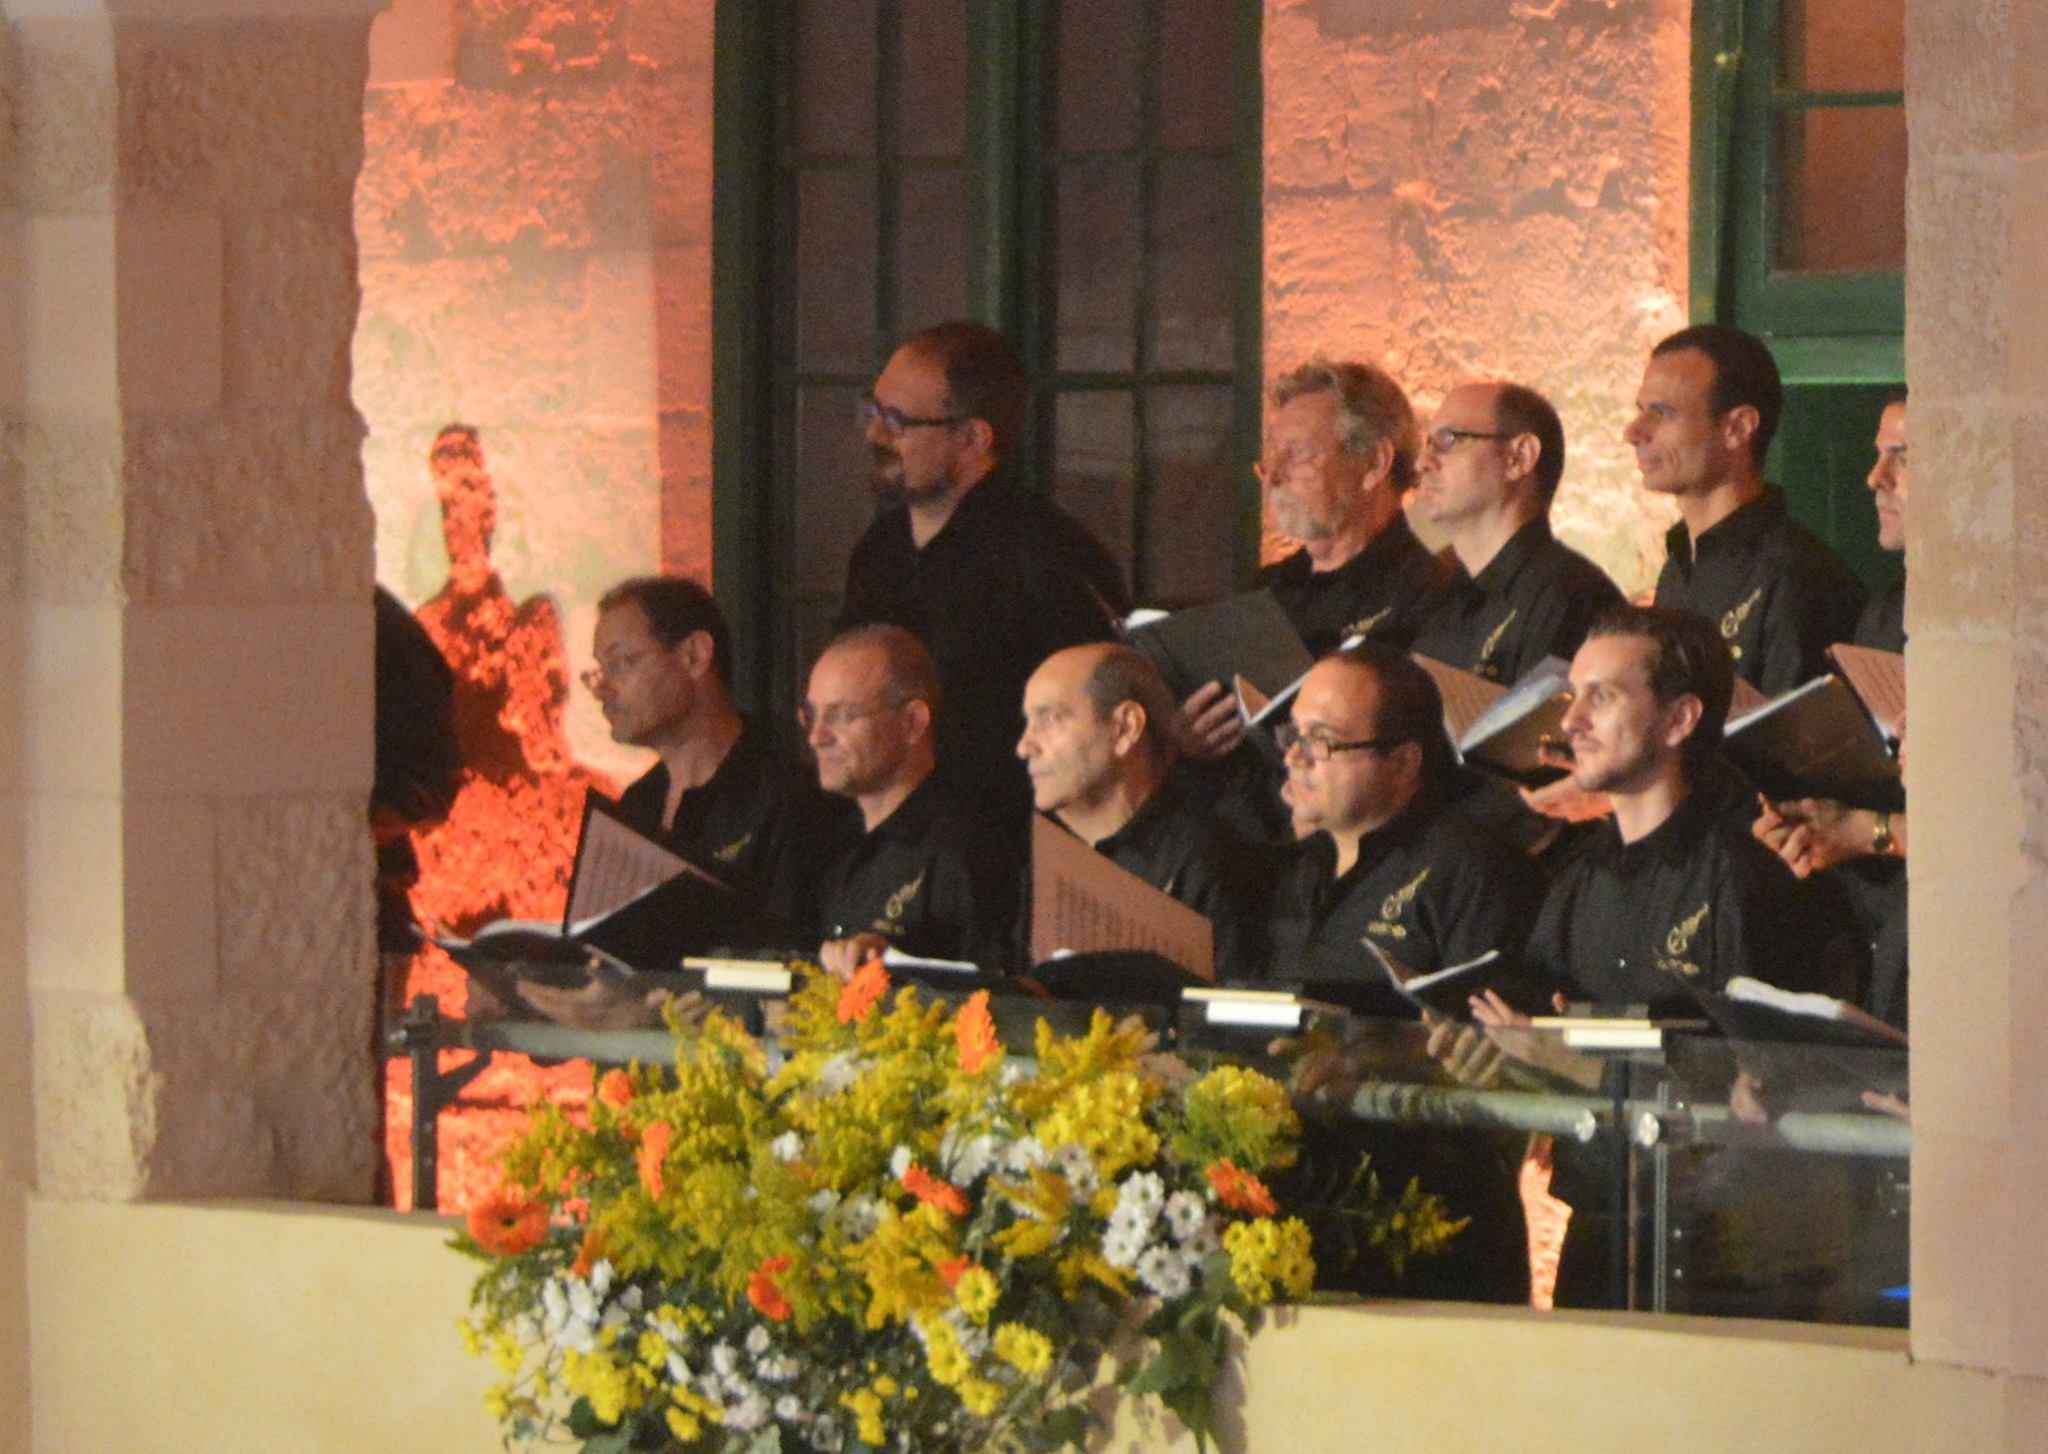 TNCS HSBC concert with the Malta Philharmonic Orchestra under the baton of Mro Wayne Marshall